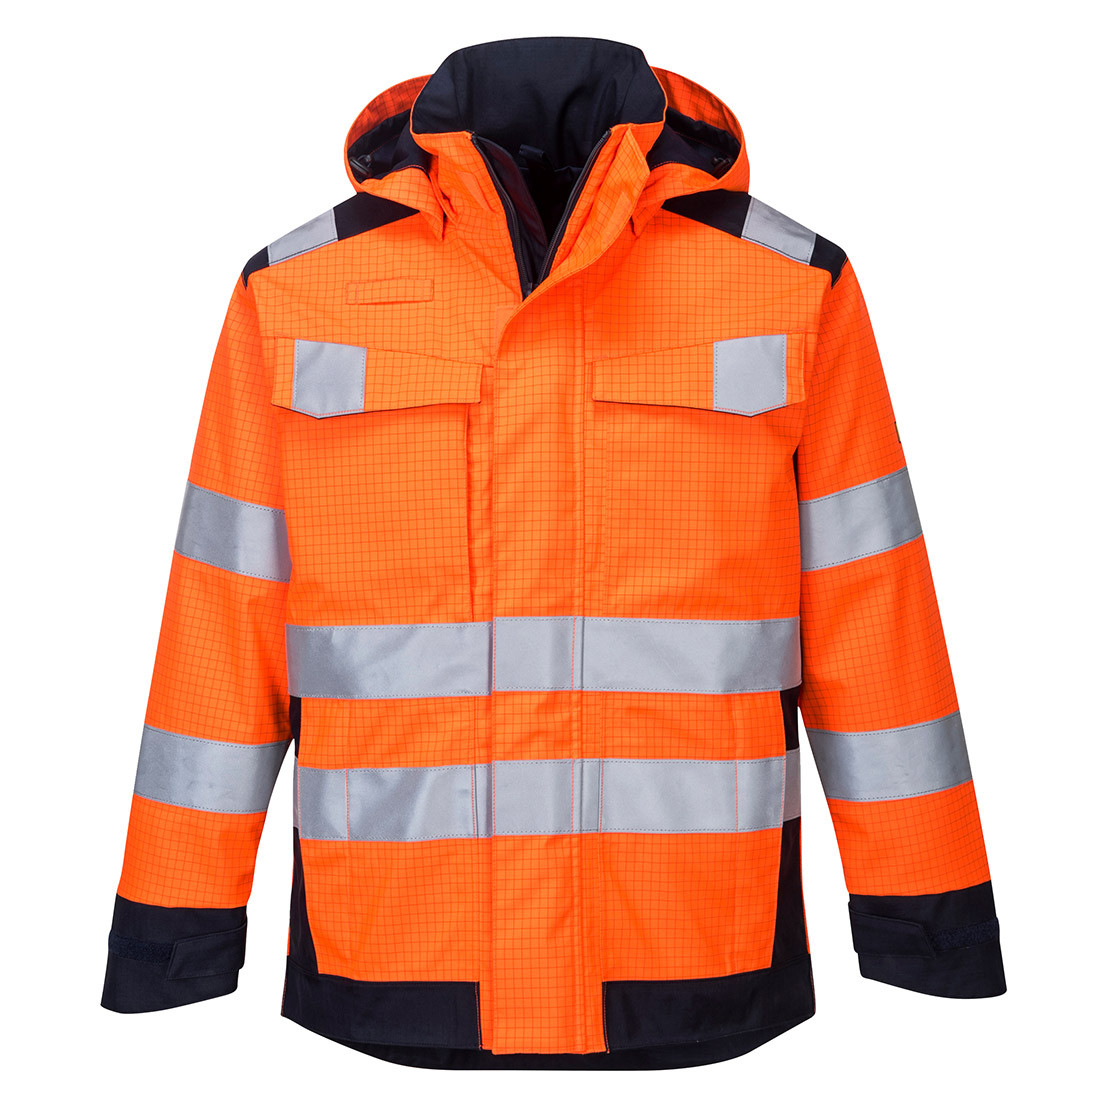 Modaflame Rain Multi Norm Arc Jacket - Safetywear